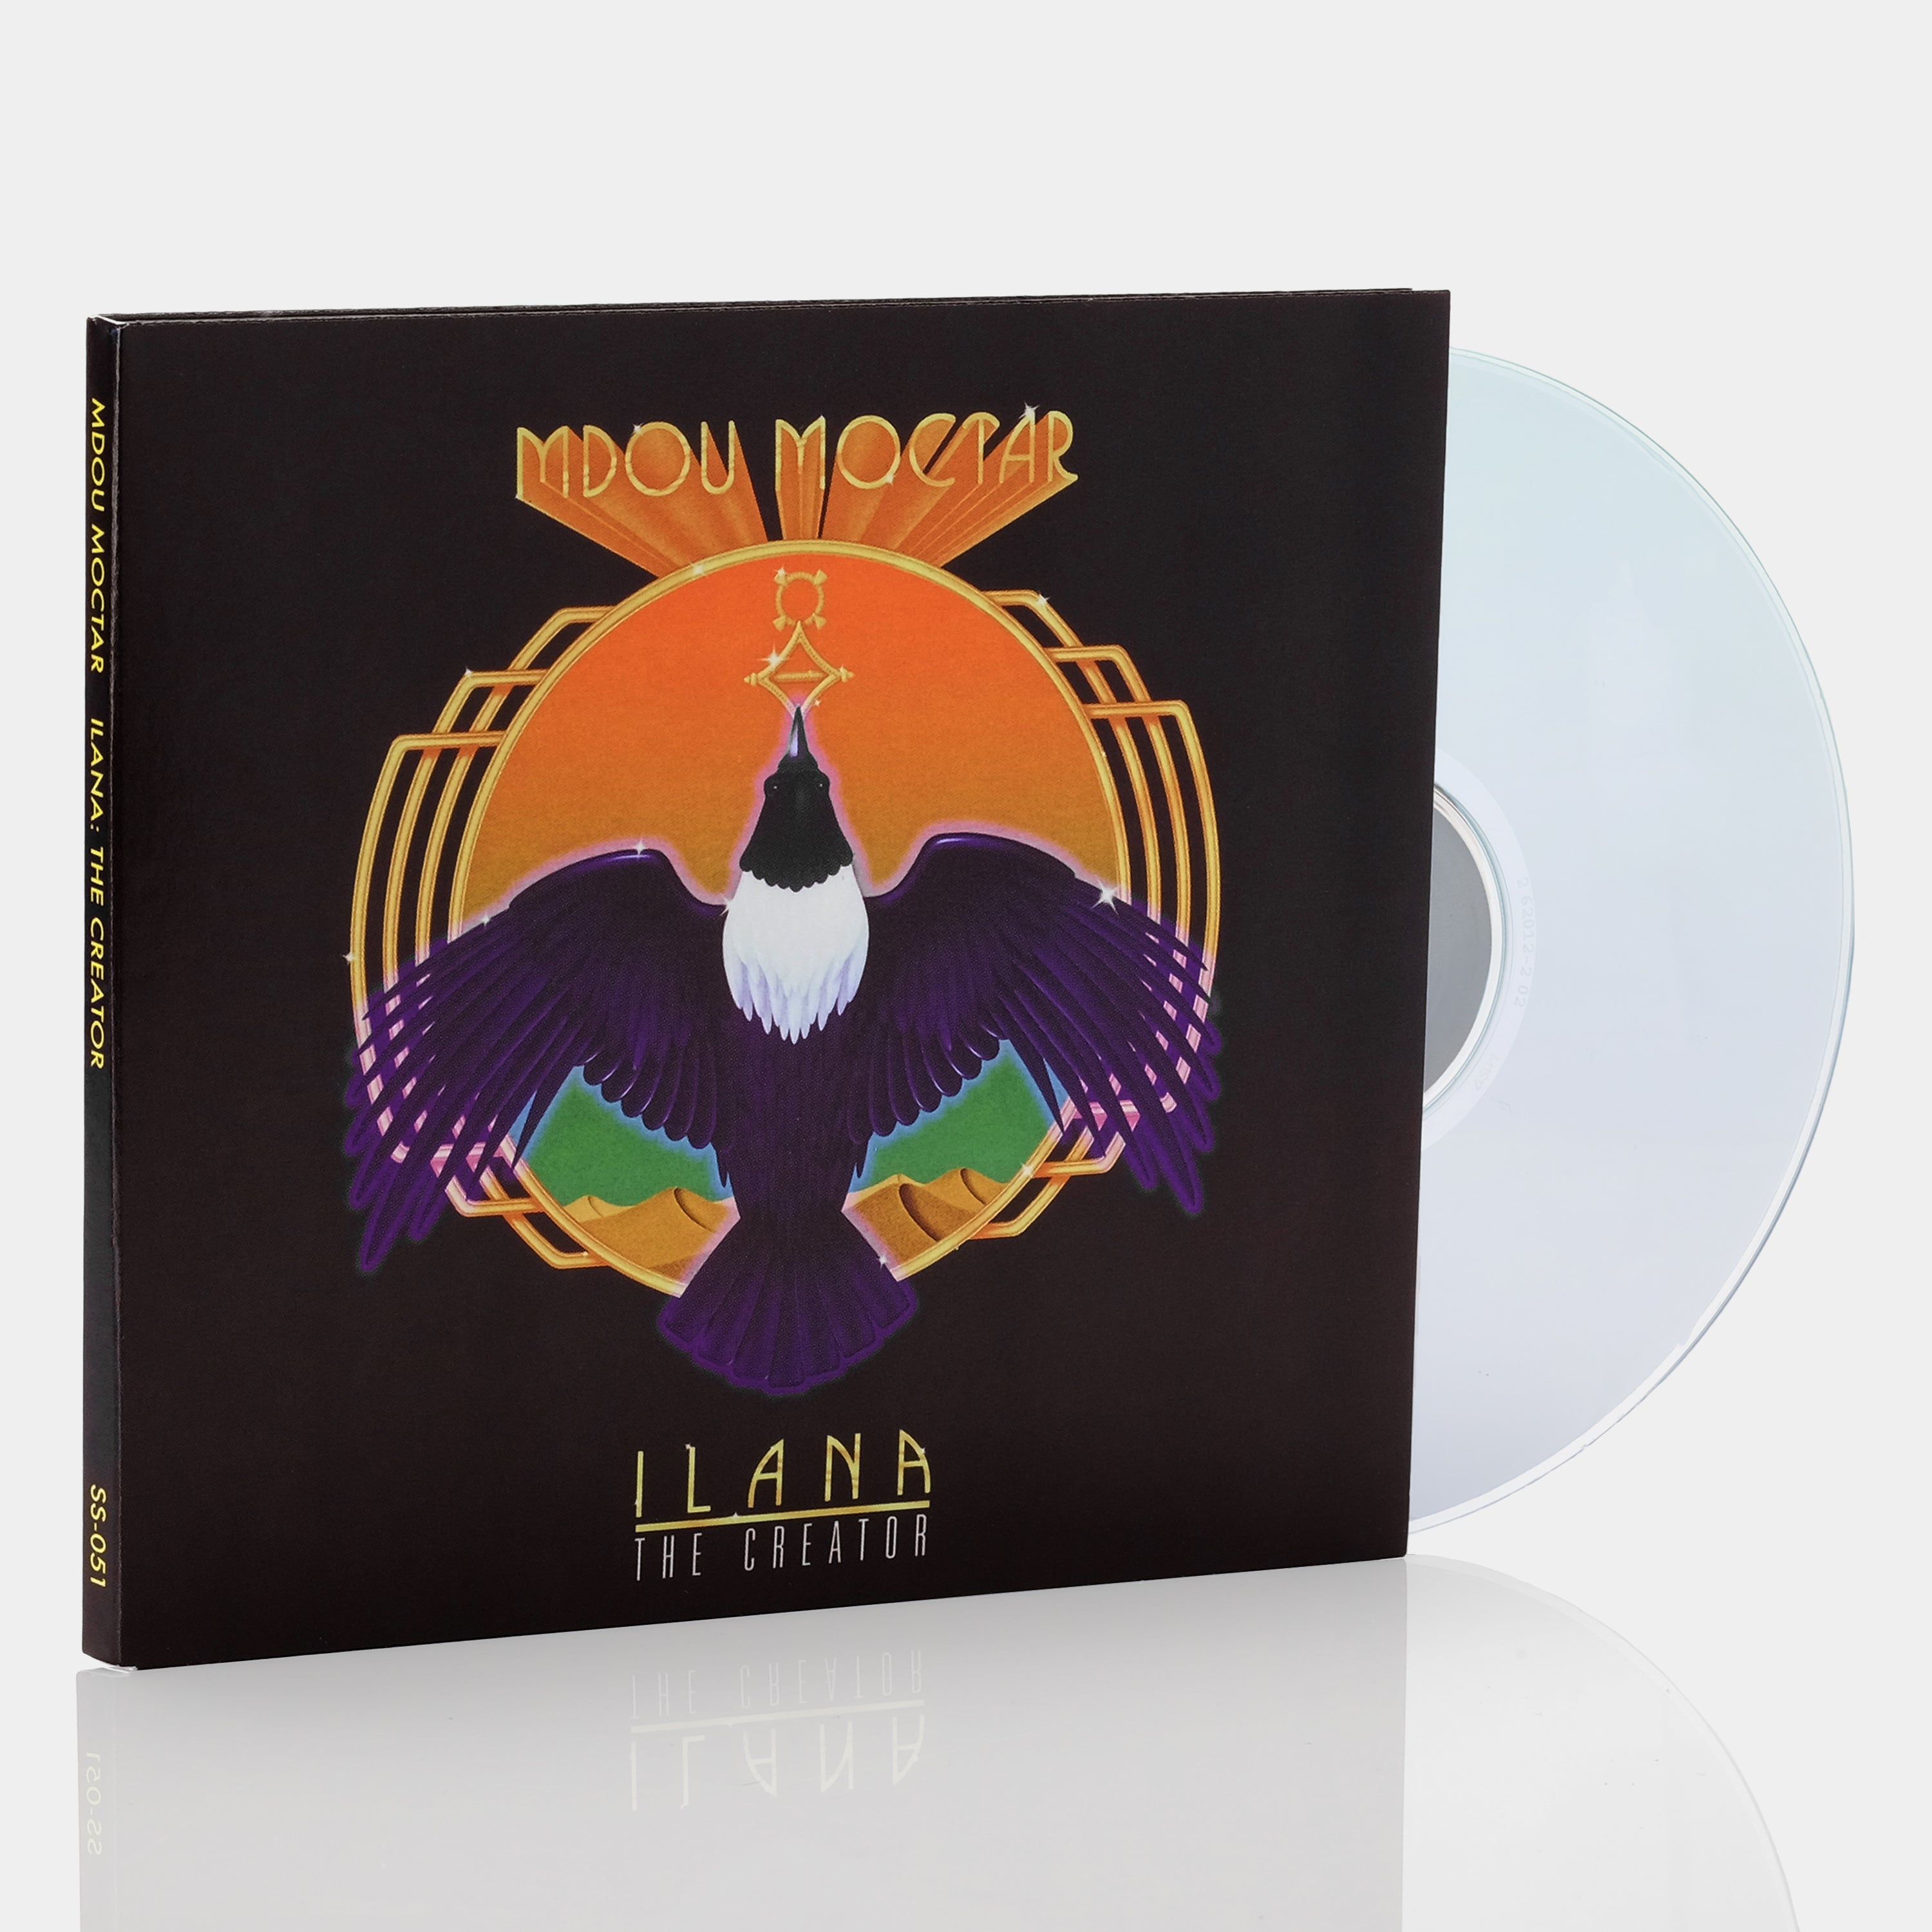 Mdou Moctar - Ilana: The Creator CD